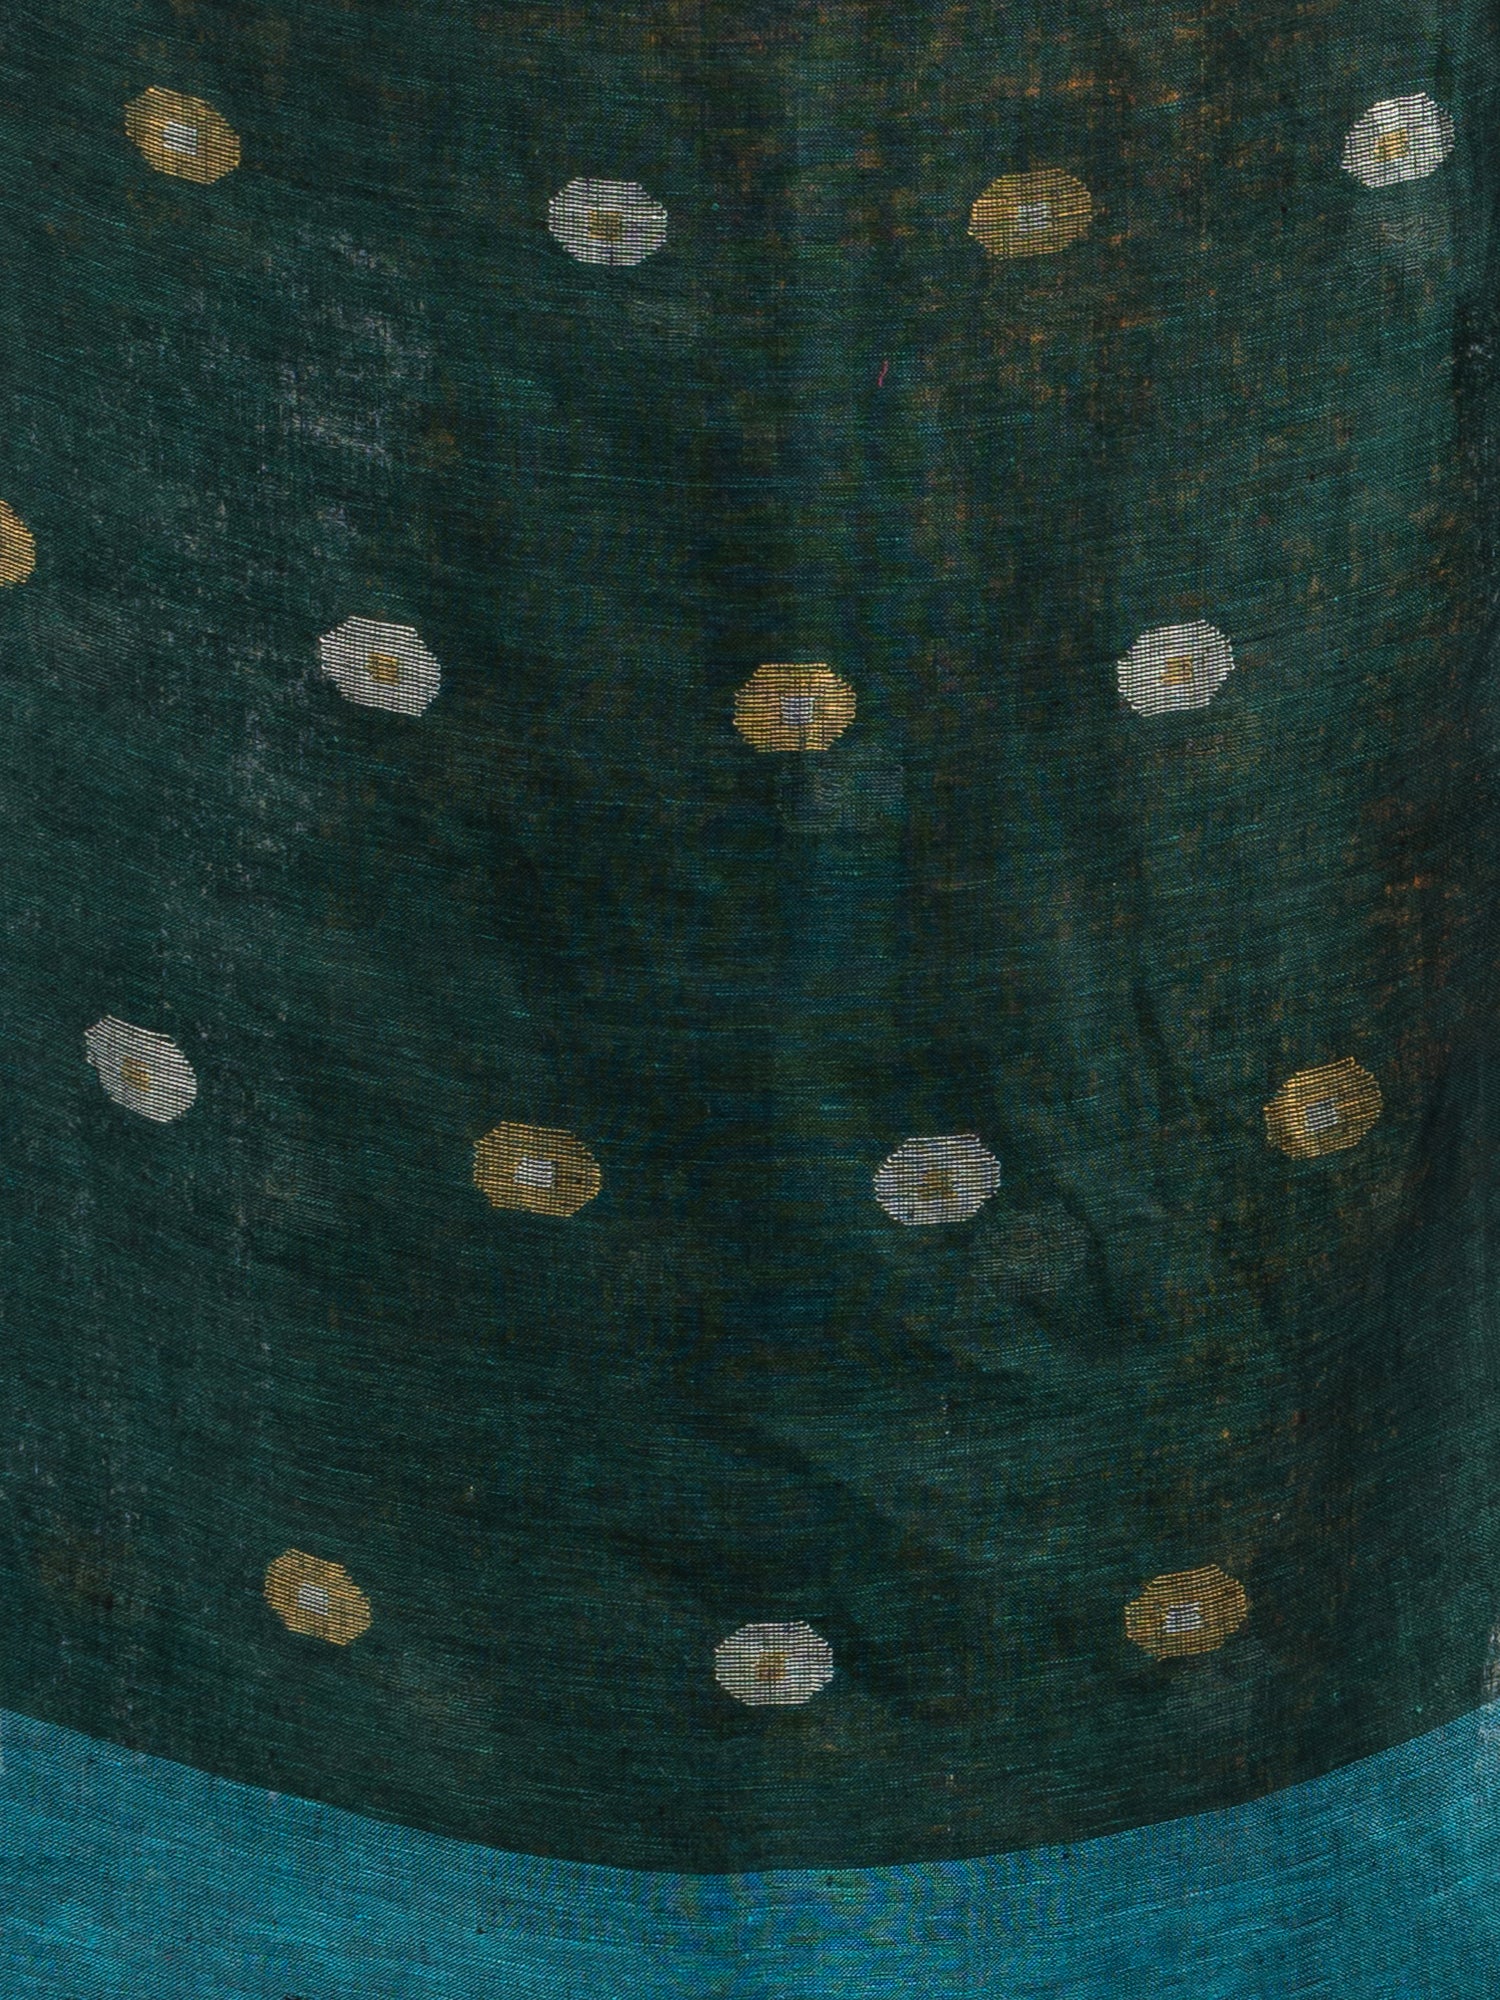 Women's Sky blue battle green half and half with ball buti pallu in silver zari border handwoven linen saree - Angoshobha